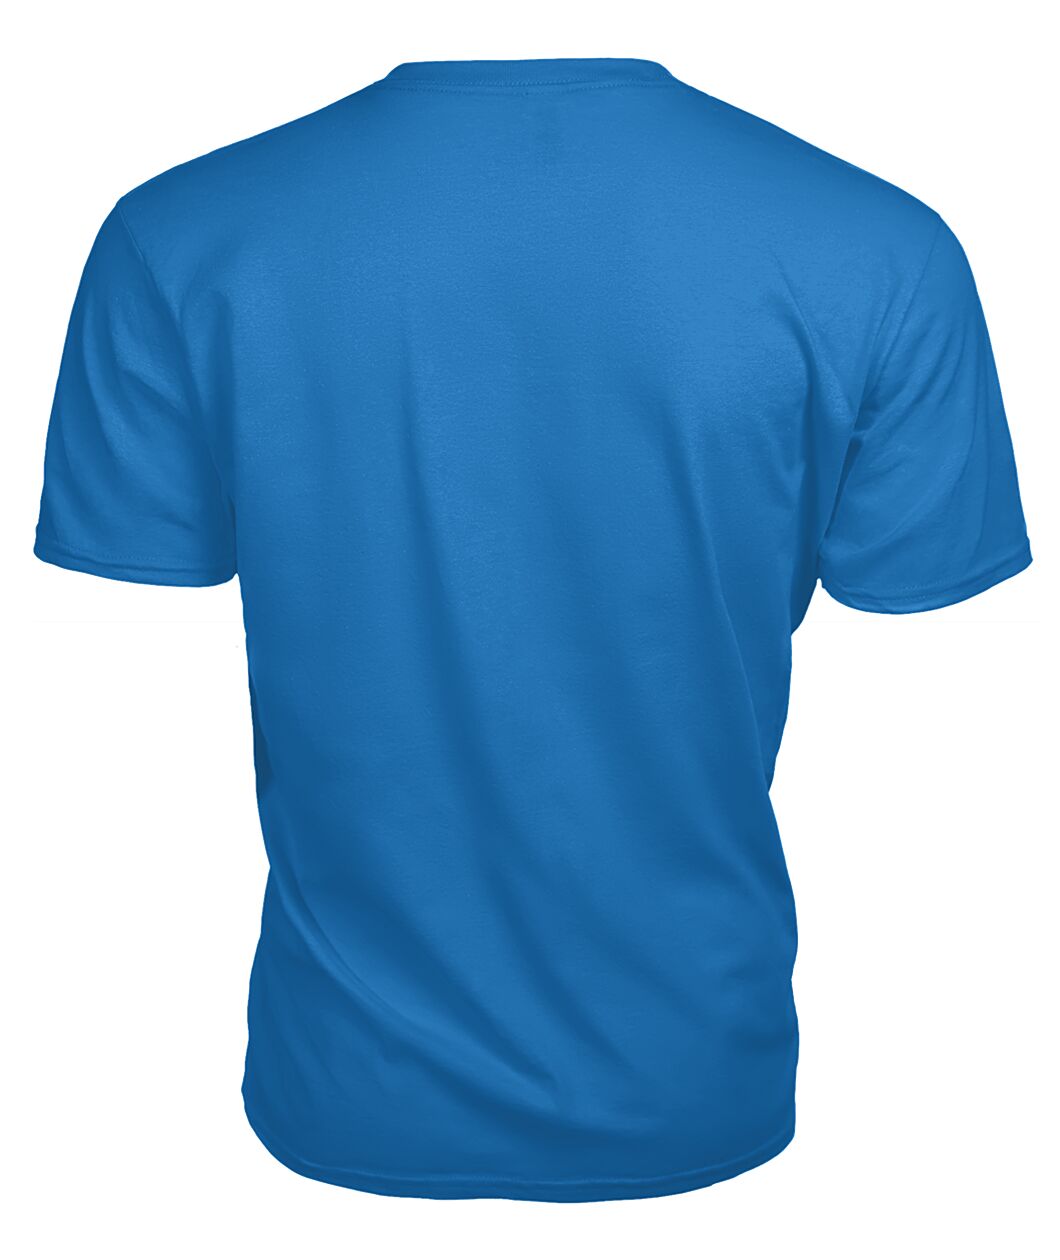 Preston Family Tartan - 2D T-shirt